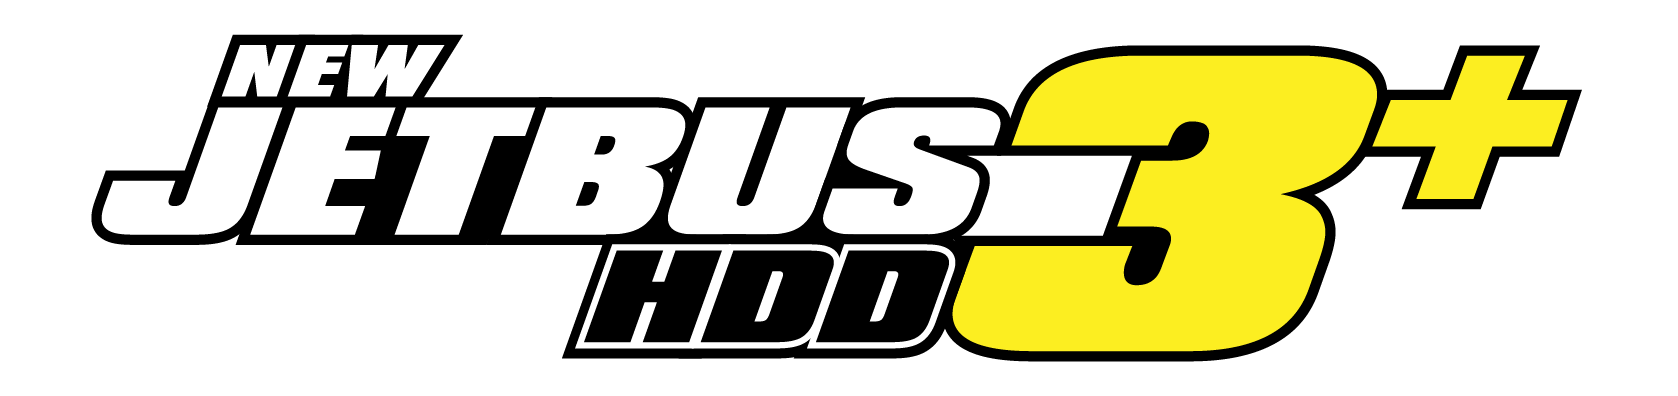 logo jetbus